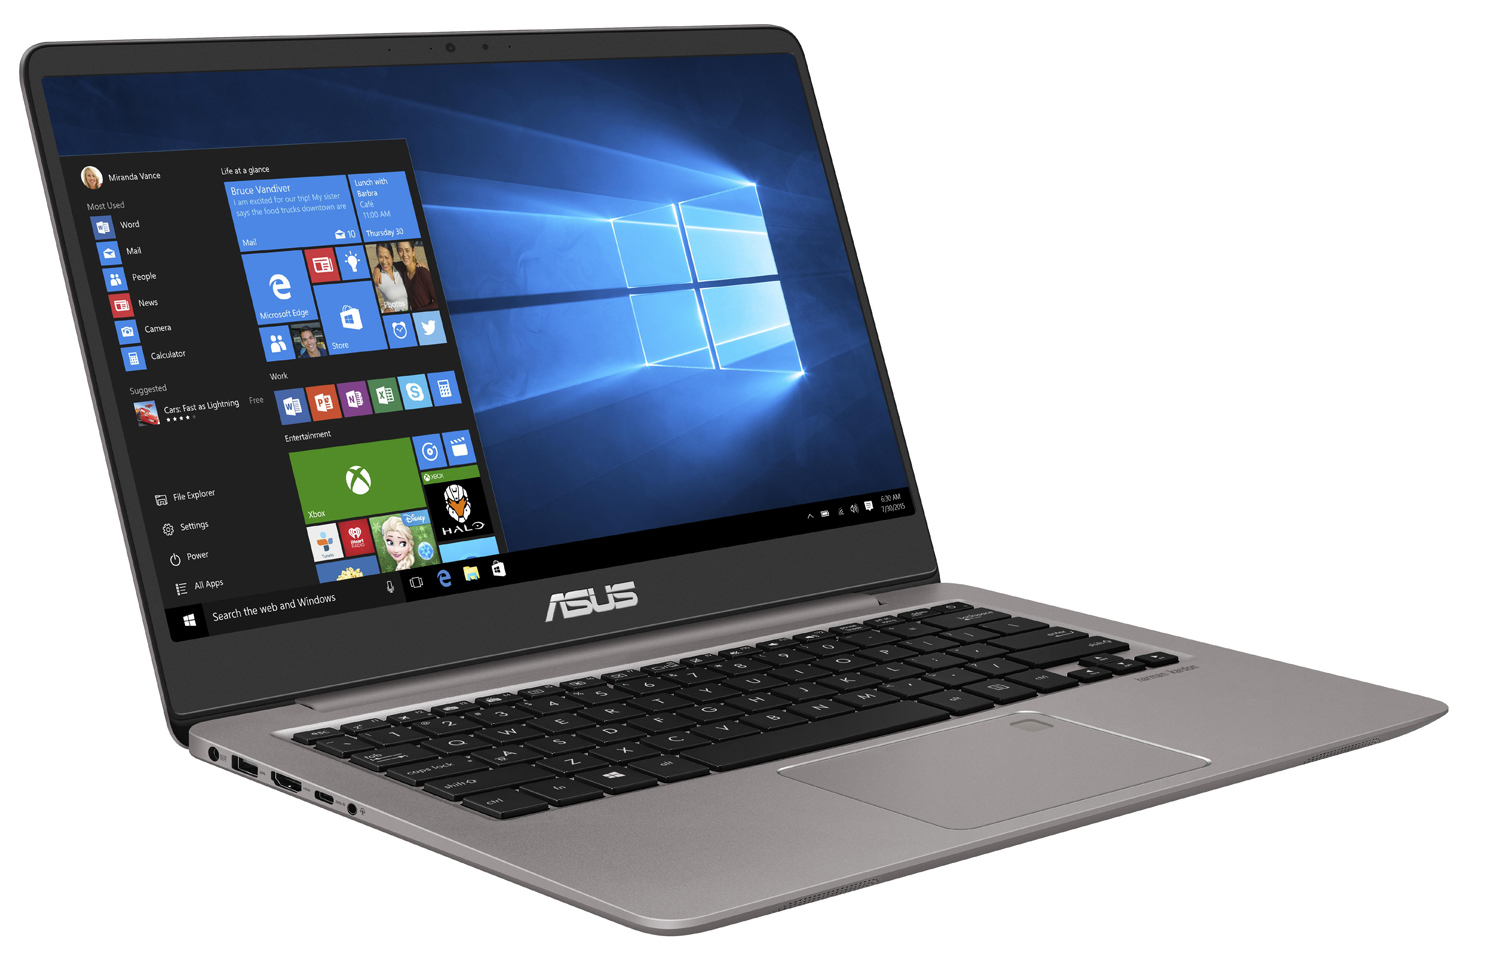 Asus ZenBook UX3410UQ (7500U, 940MX, Full HD) Laptop Review - NotebookCheck.net Reviews